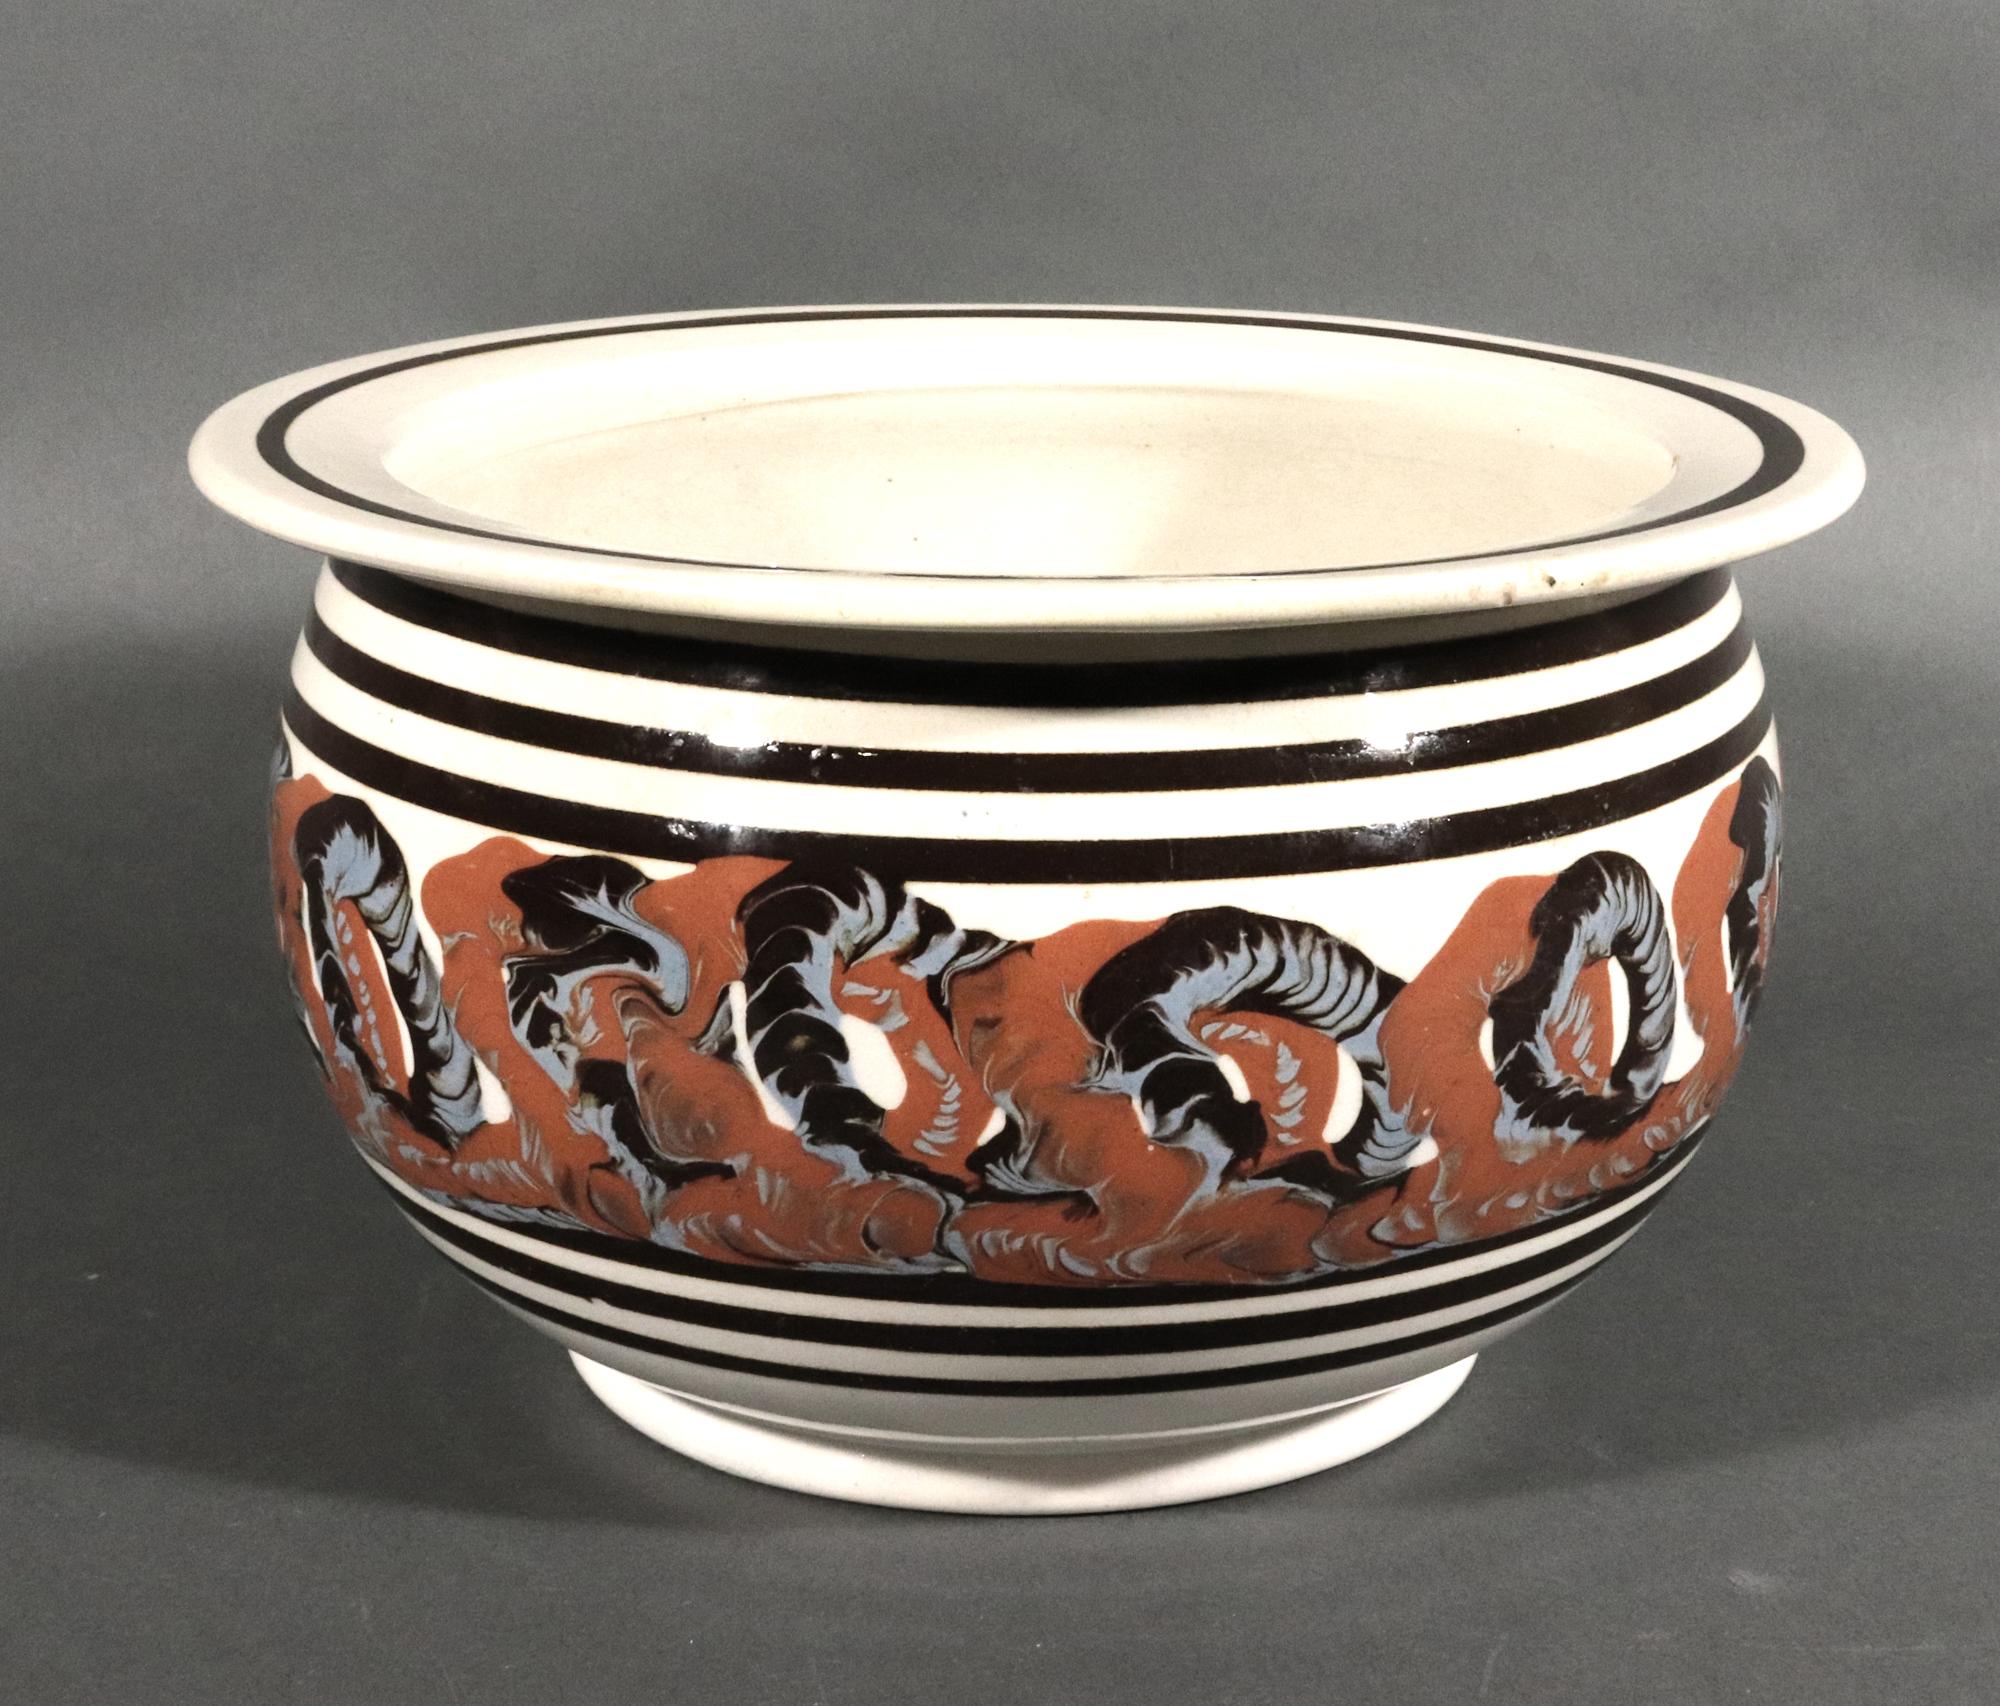 19th Century English Mocha Chamber Pot with Earthworm Design